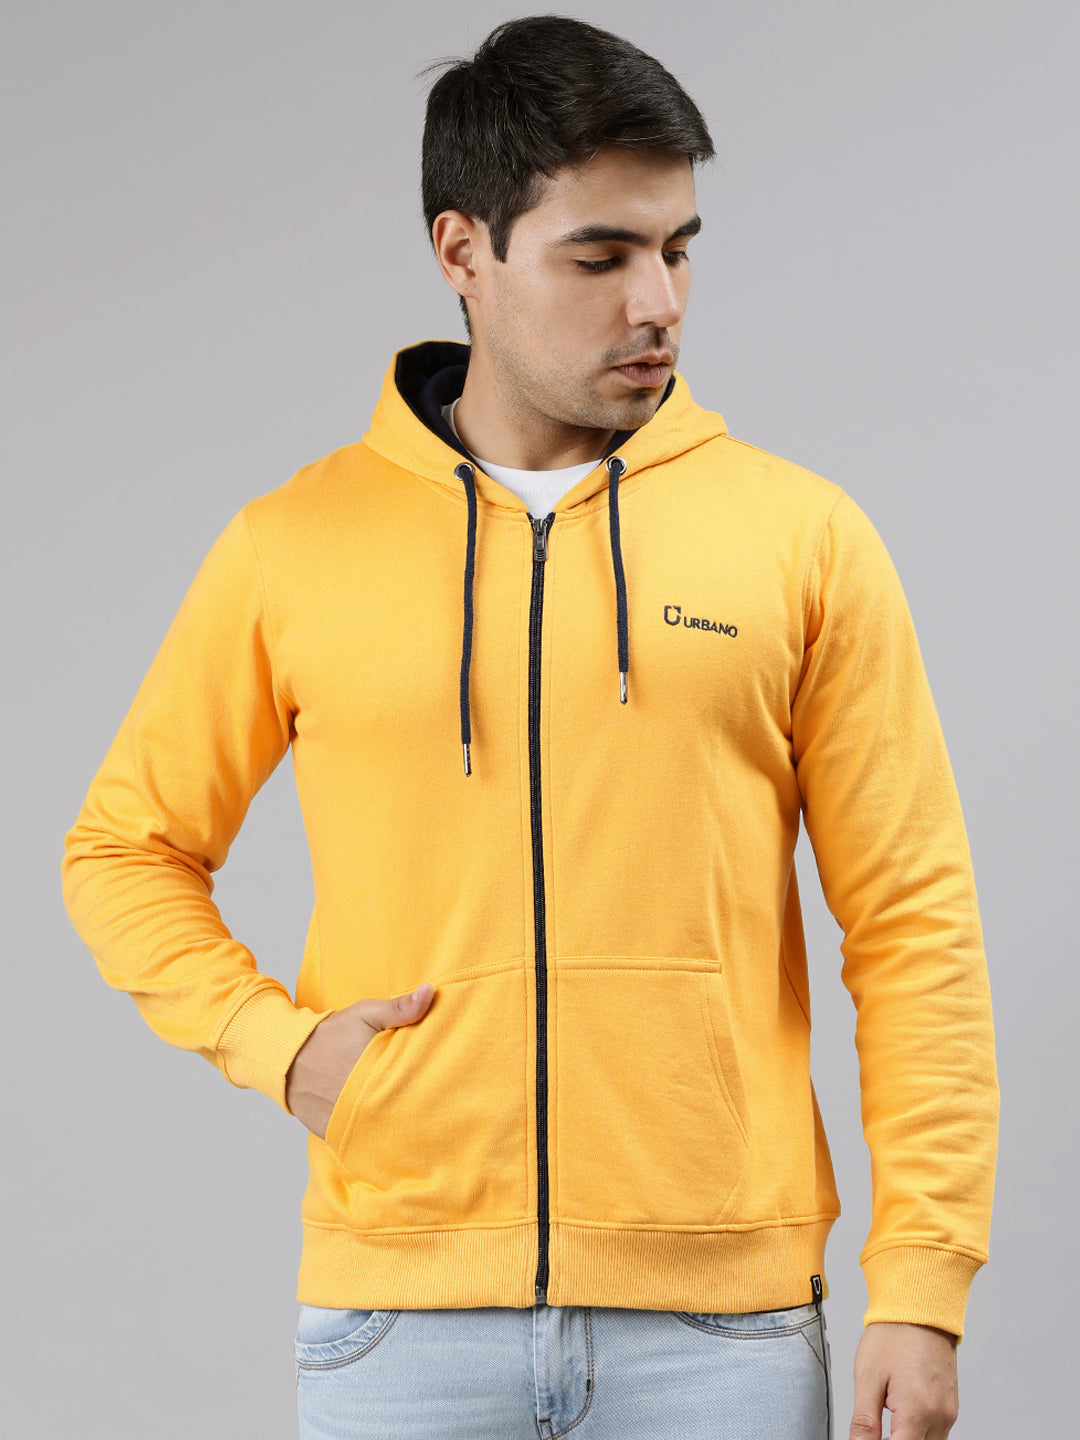 Urbano Fashion Men's Yellow, Navy Cotton Zippered Hooded Sweatshirt